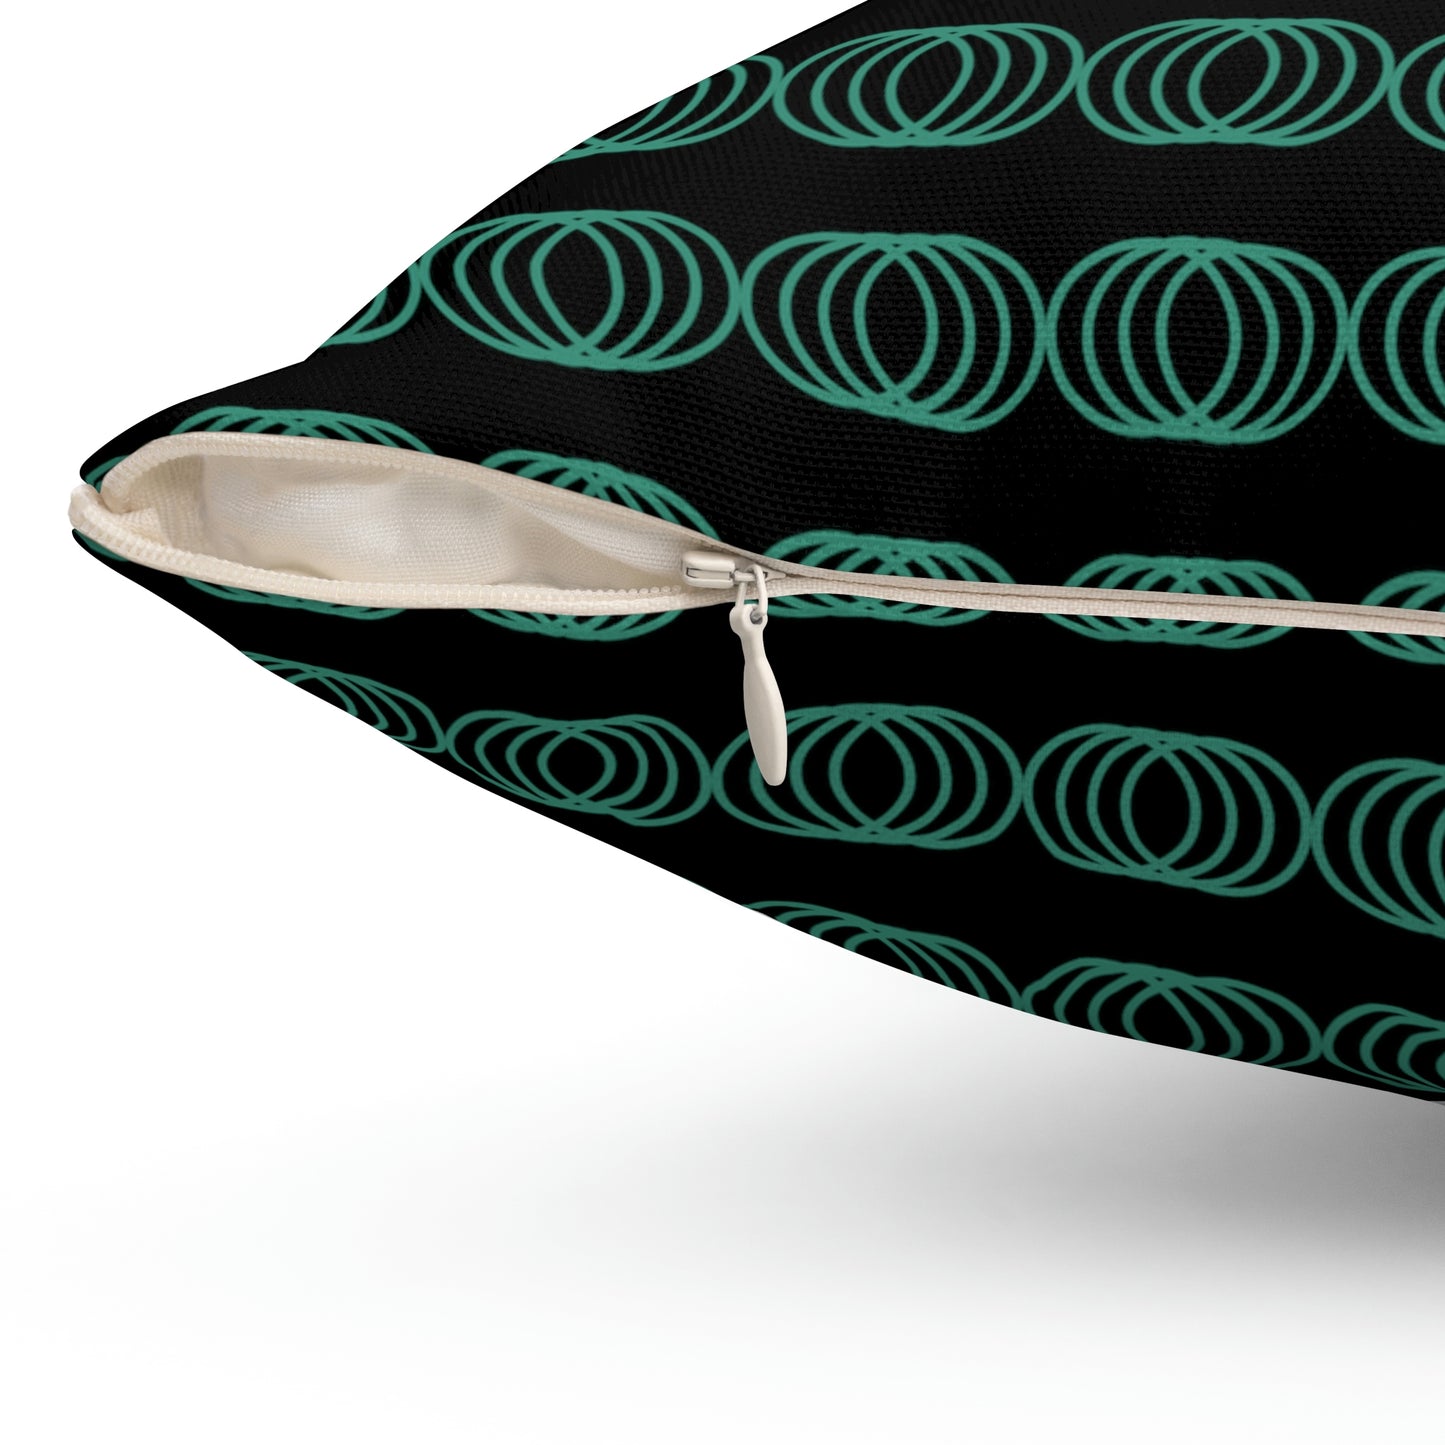 Spun Polyester Square Pillow Case "Green Circles on Black”